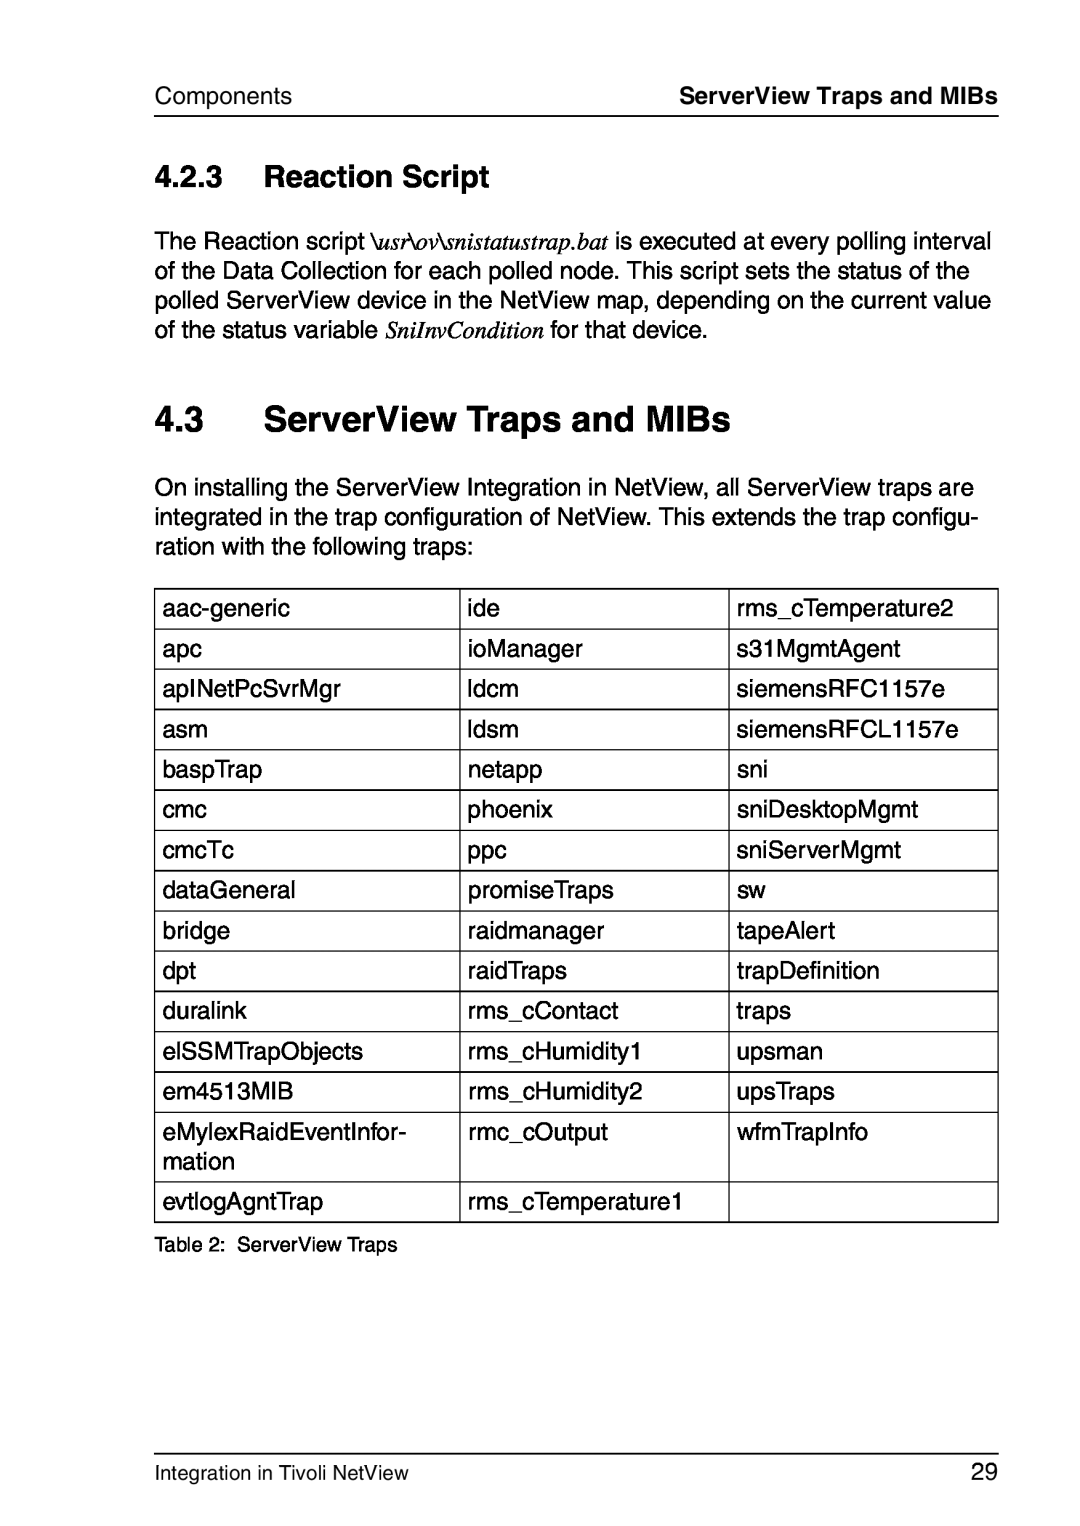 3D Connexion TivoII manual 4.3ServerView Traps and MIBs, 4.2.3Reaction Script, Components 